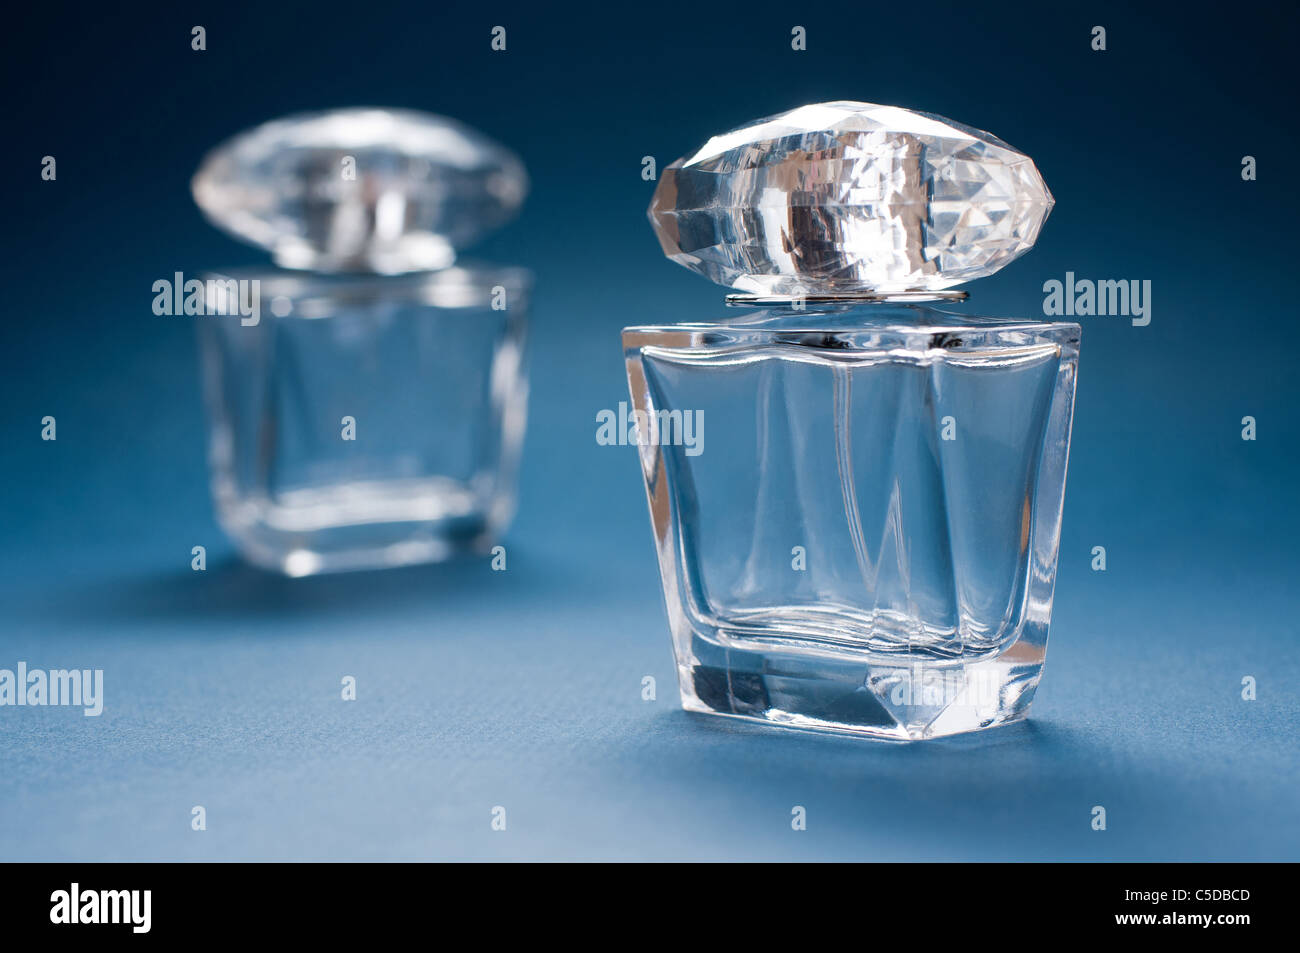 Frascos de fragancia, dos elementos de cristal transparente, mini